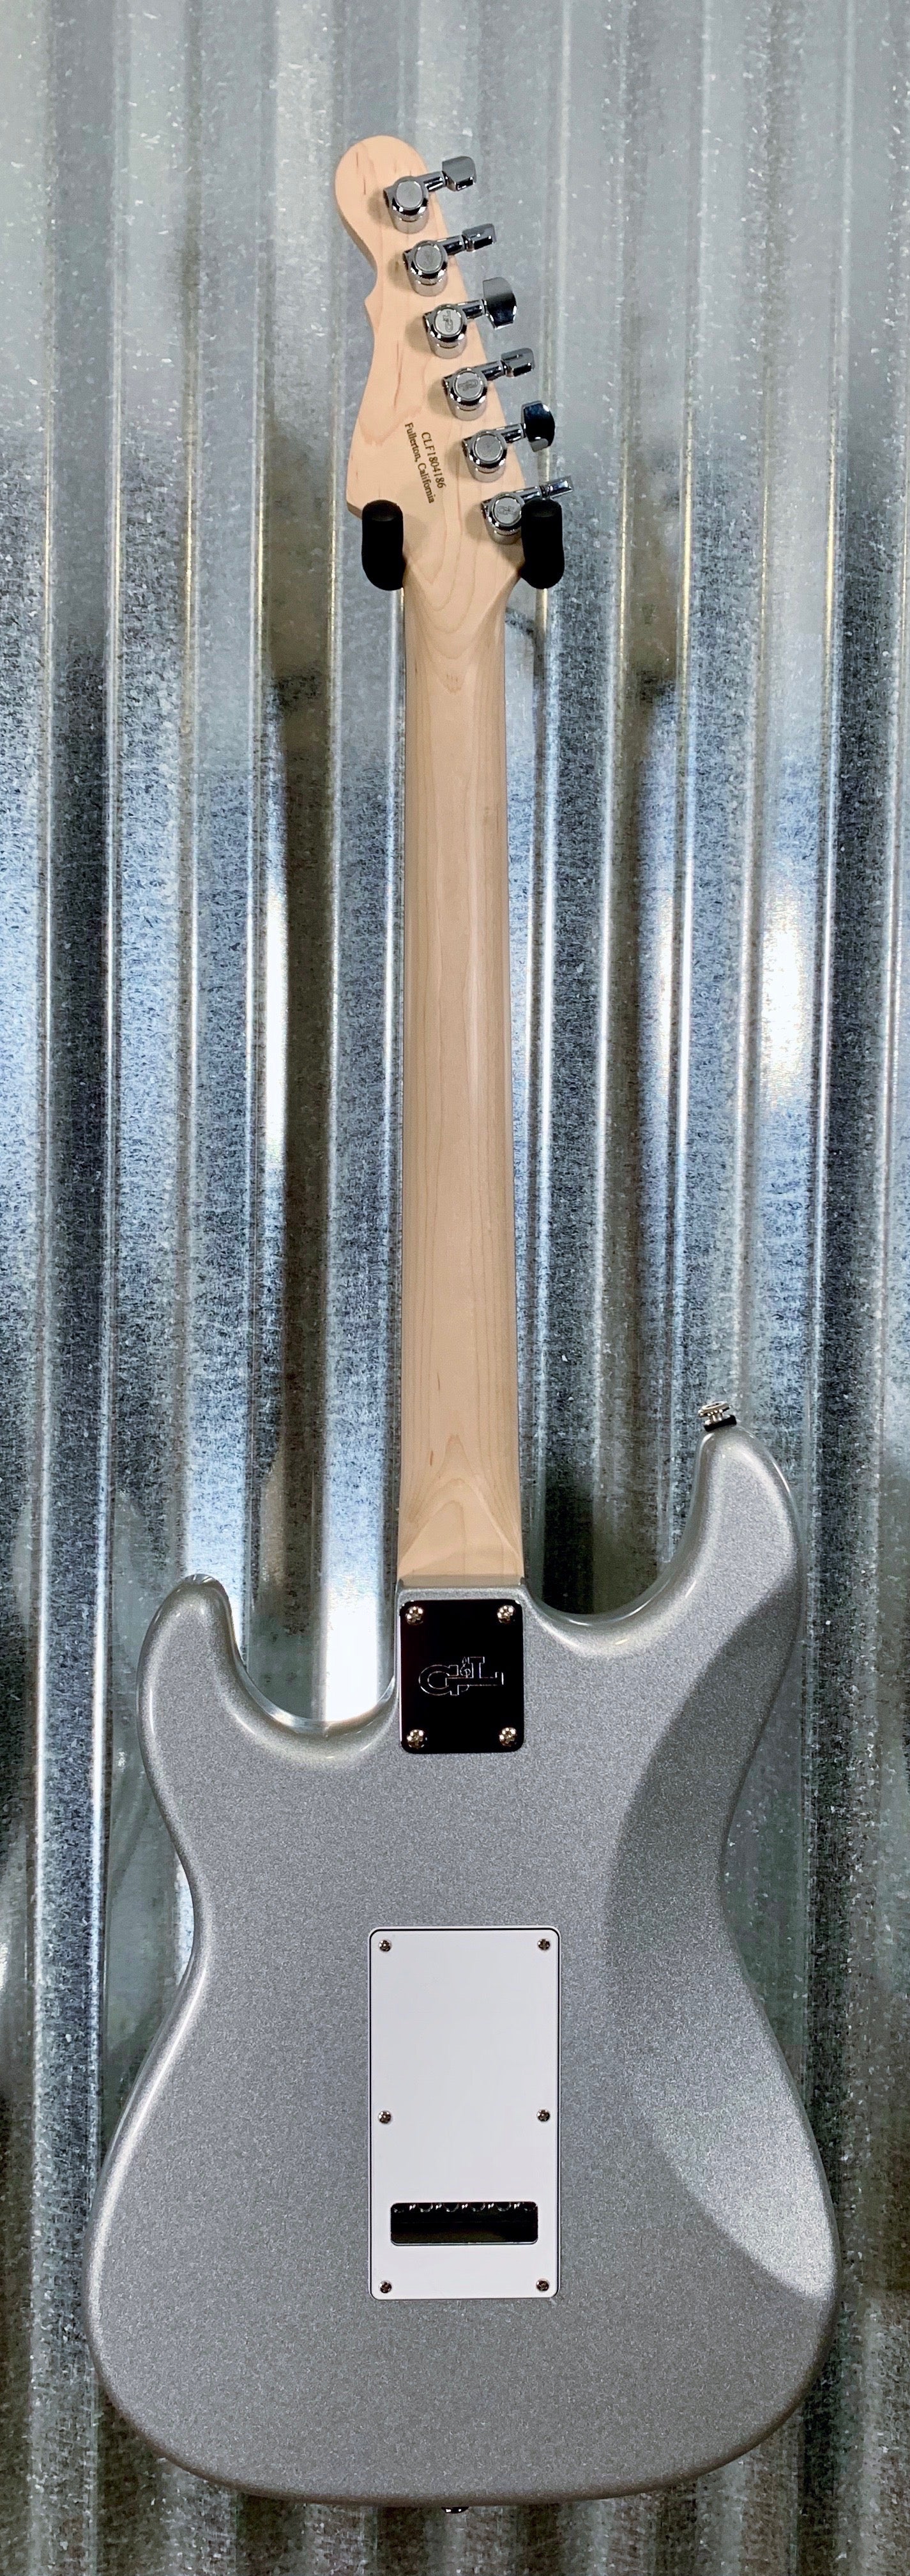 G&L USA Fullerton Custom Legacy Silver Metallic Guitar & Case 2018 #4186